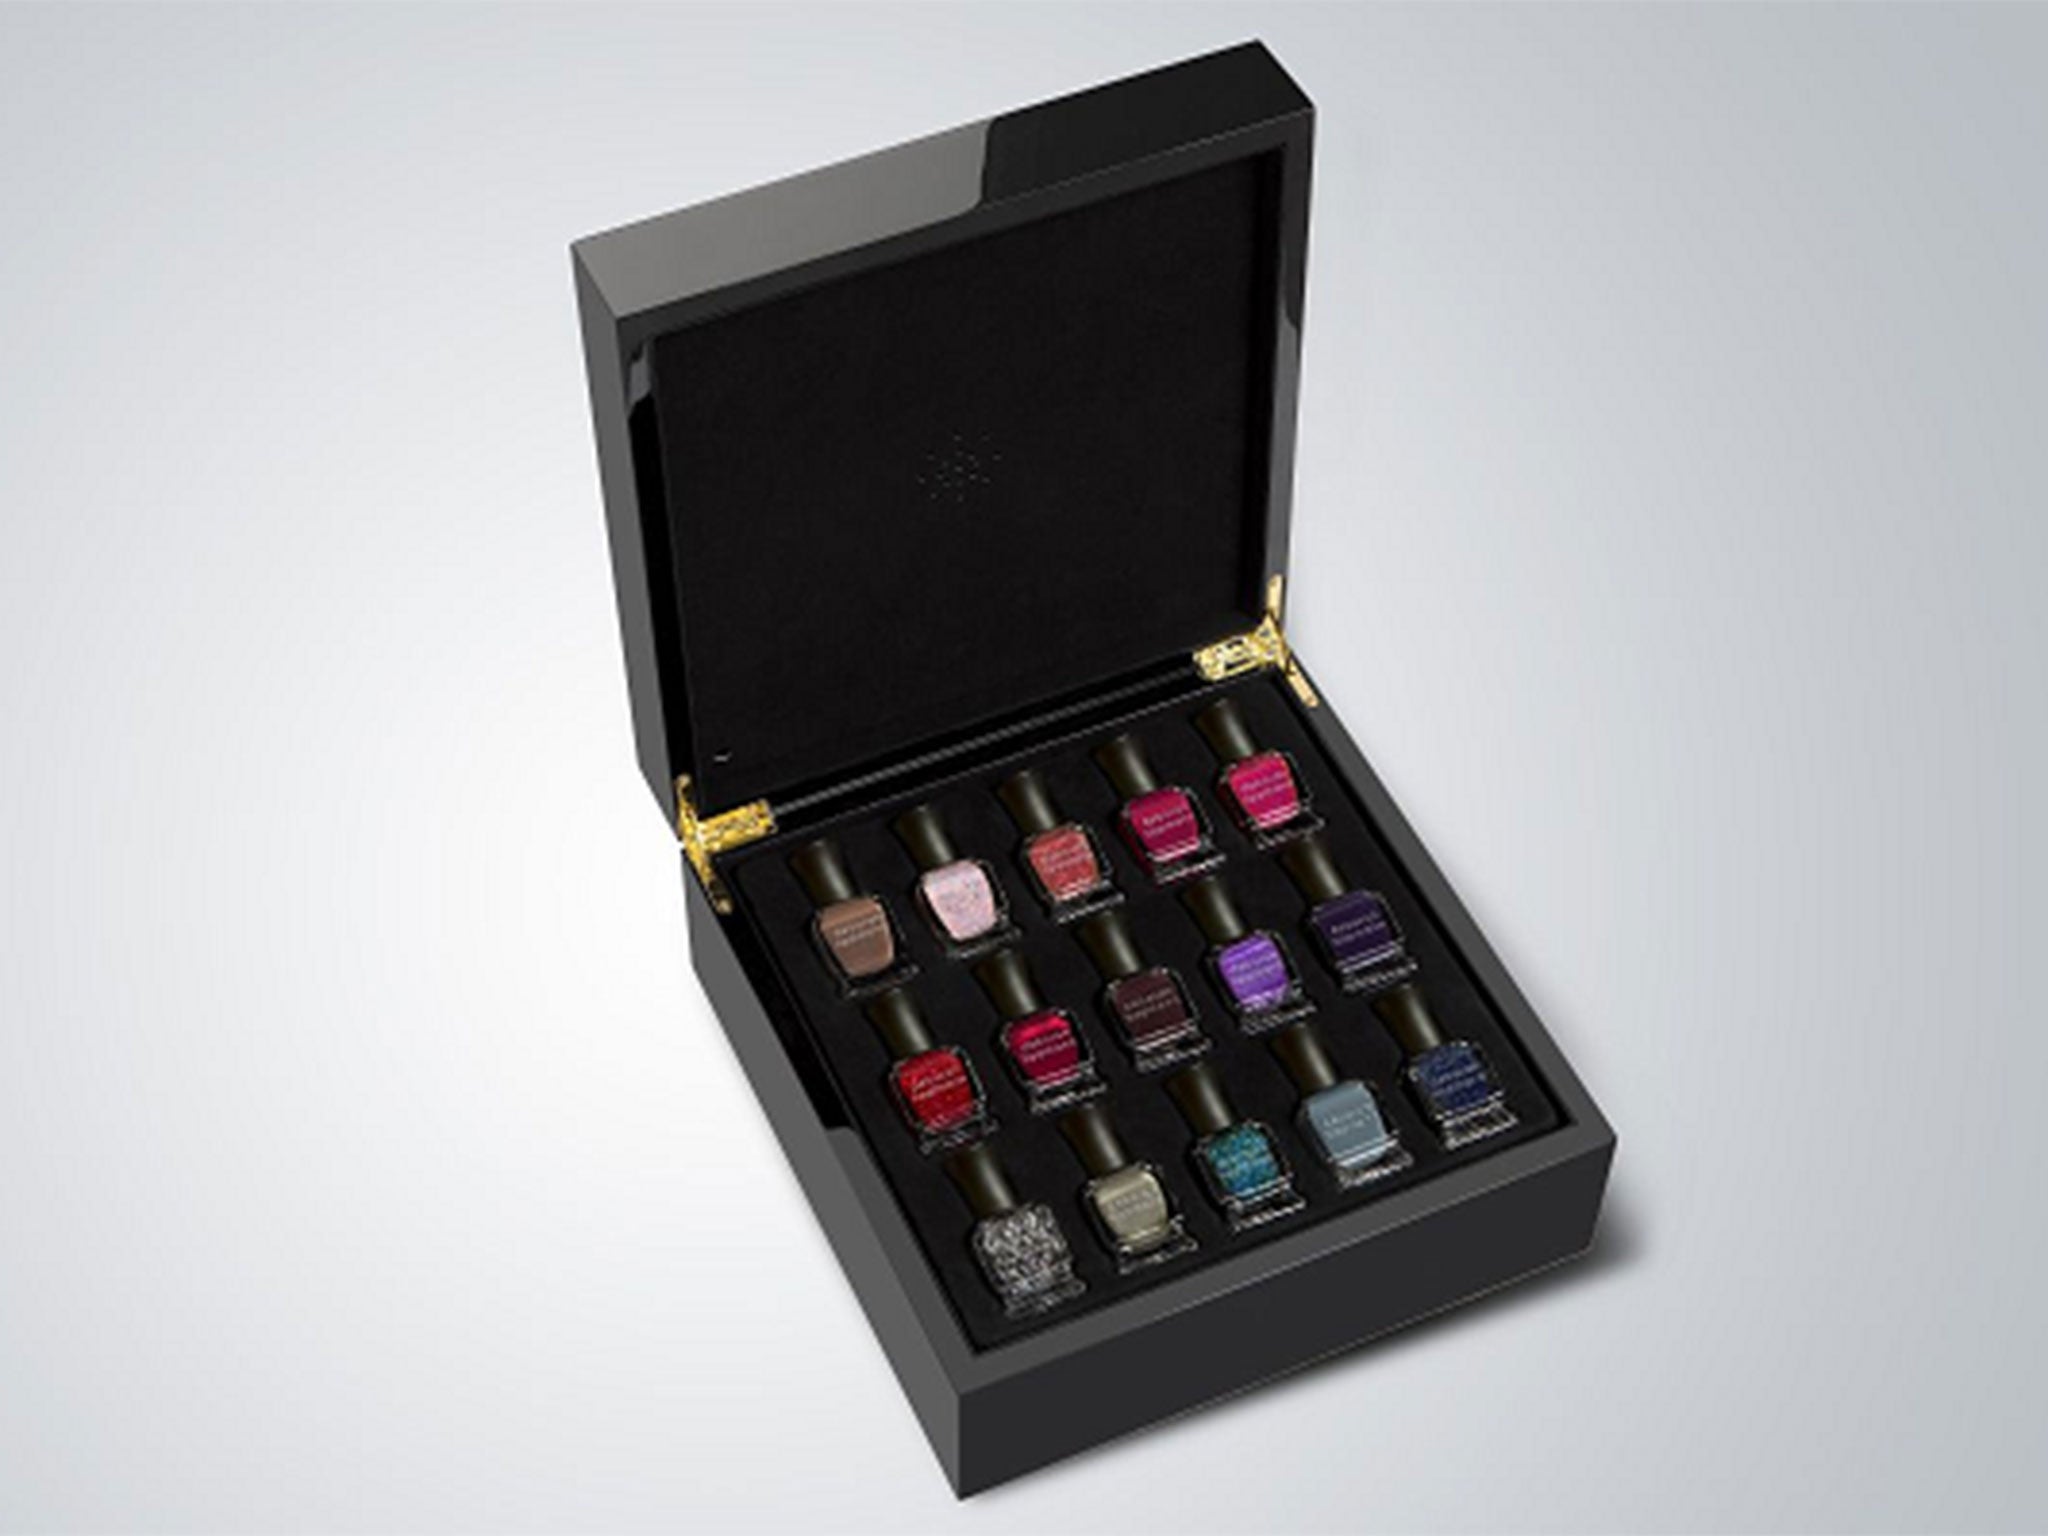 Deborah Lippmann's music box of nail lacquers